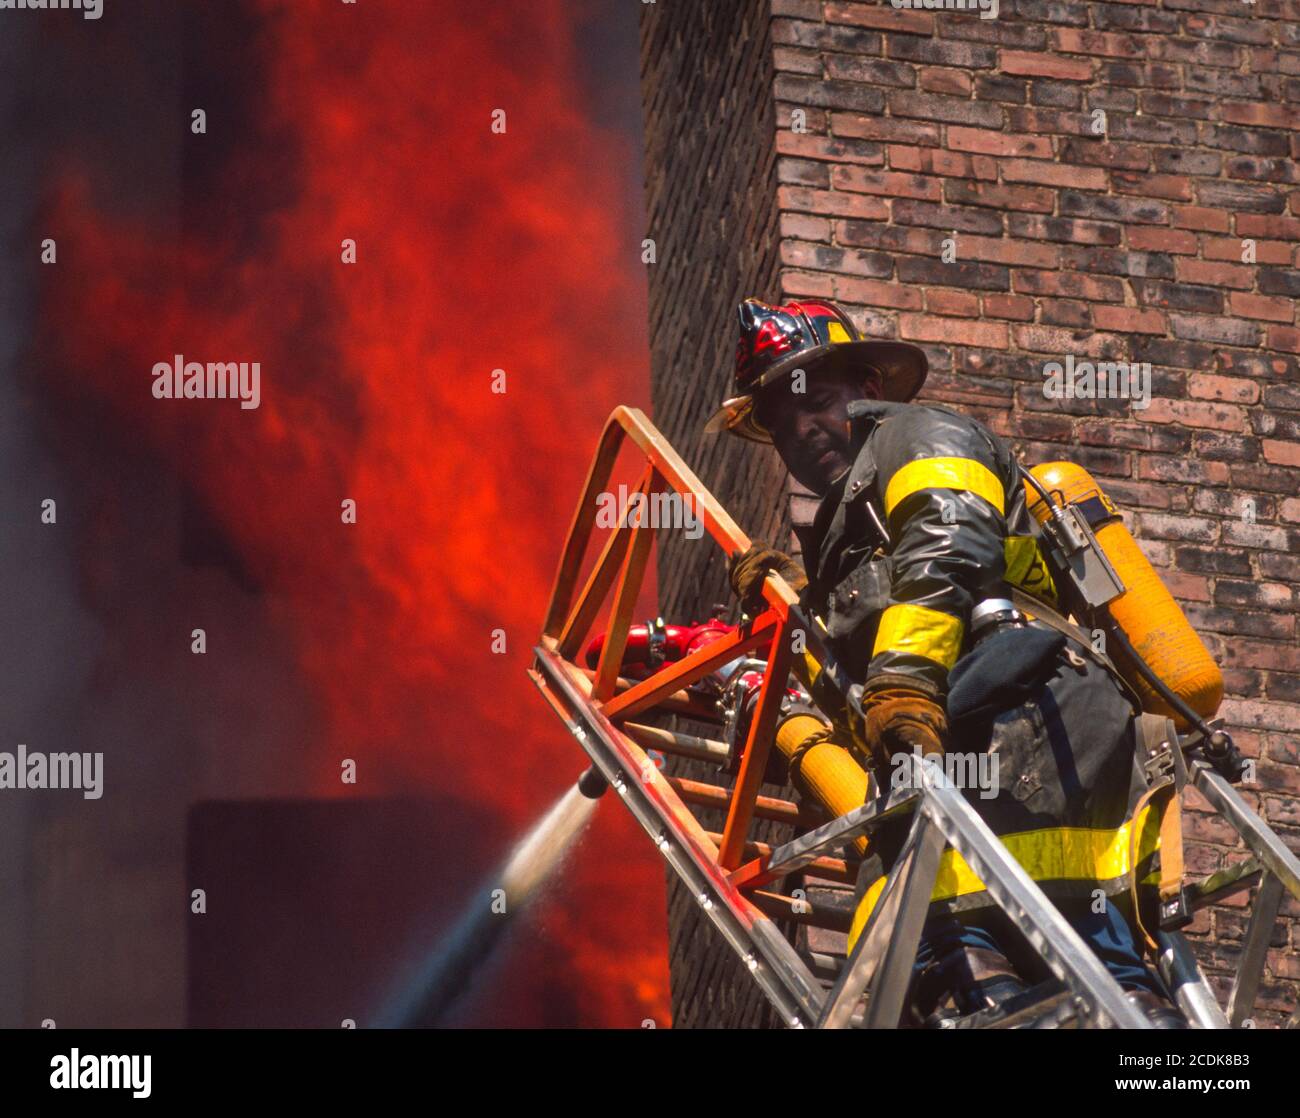 BOSTON, MASSACHUSETTS, USA - Firefighter on ladder during building fire. Stock Photo